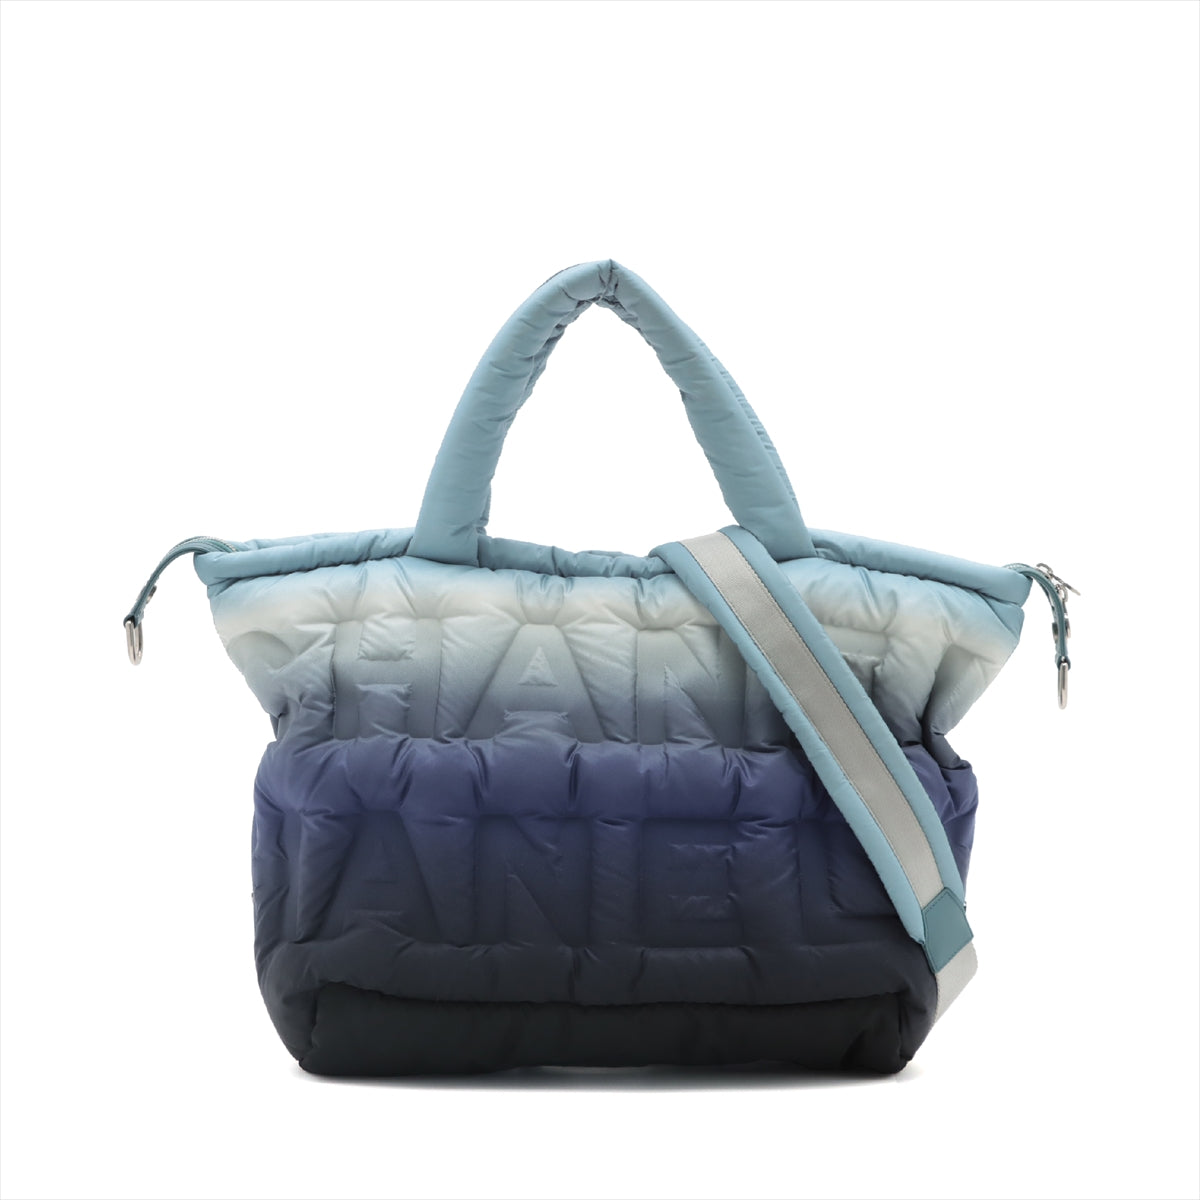 Chanel Doudoune Nylon 2 Way Handbag Coco Neige Blue Silver Metal Fittings 26XXXXXX